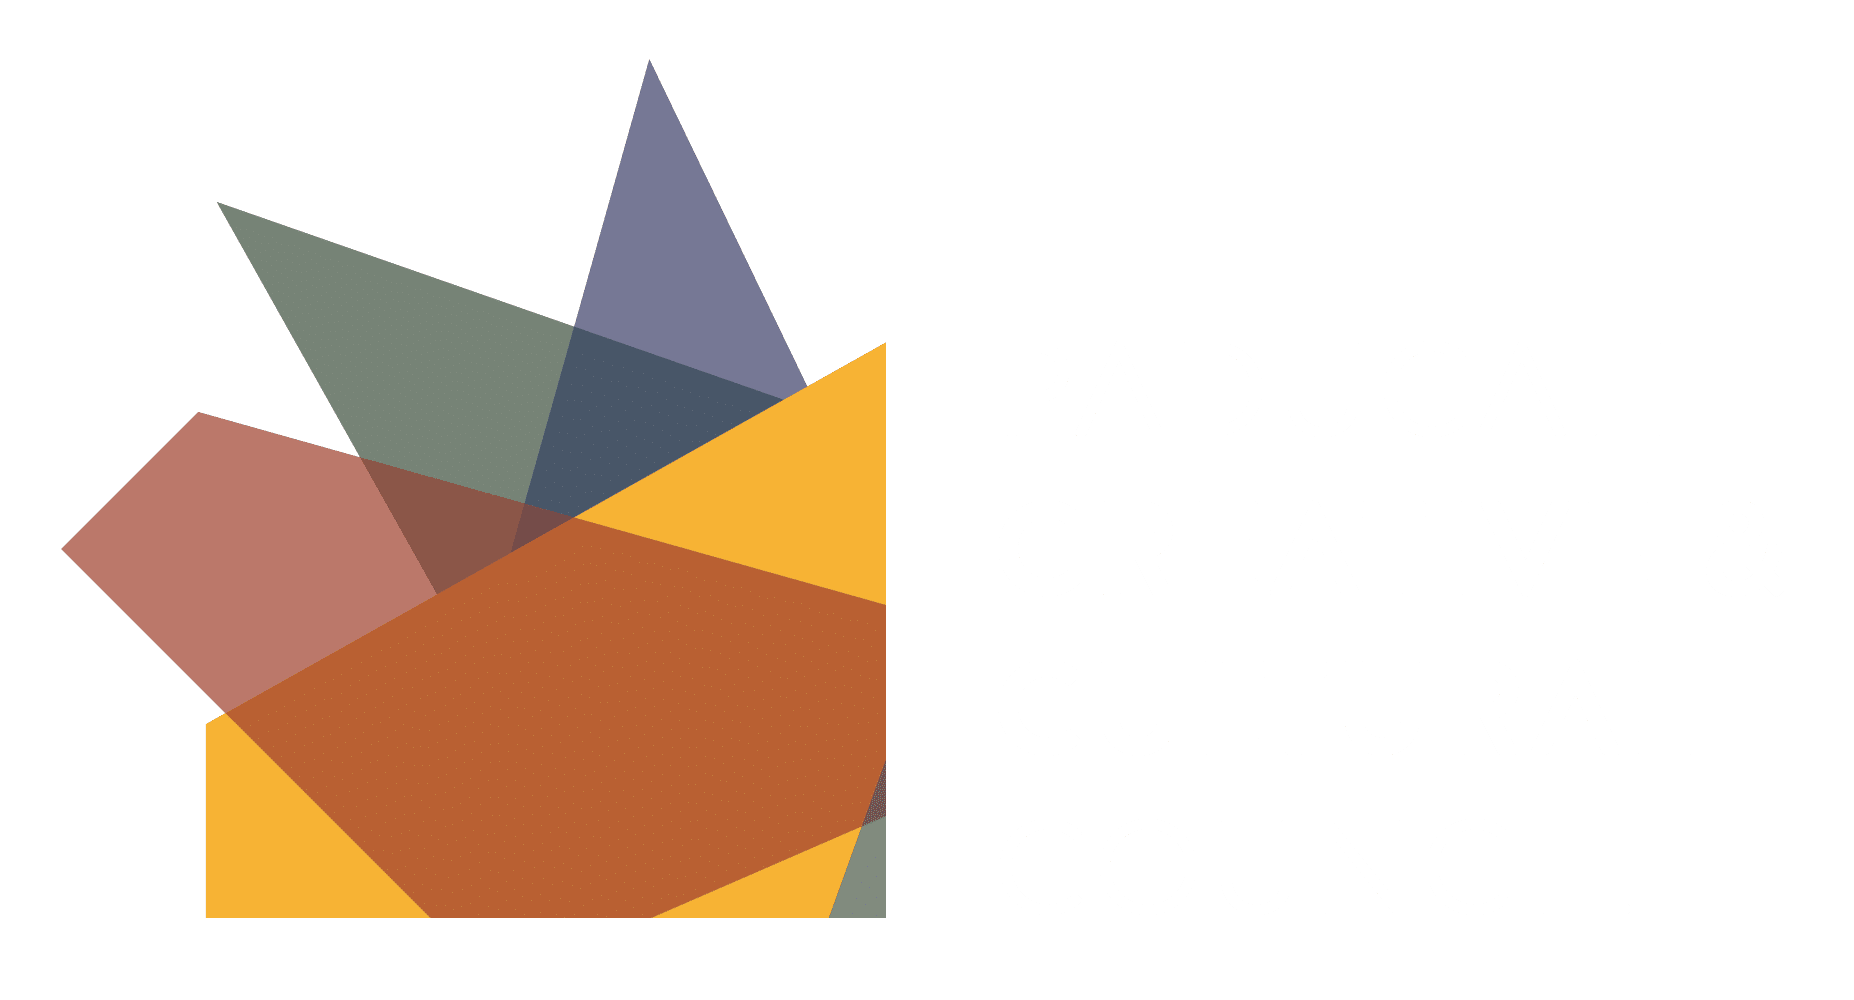 Paducah Creative & Cultural Council